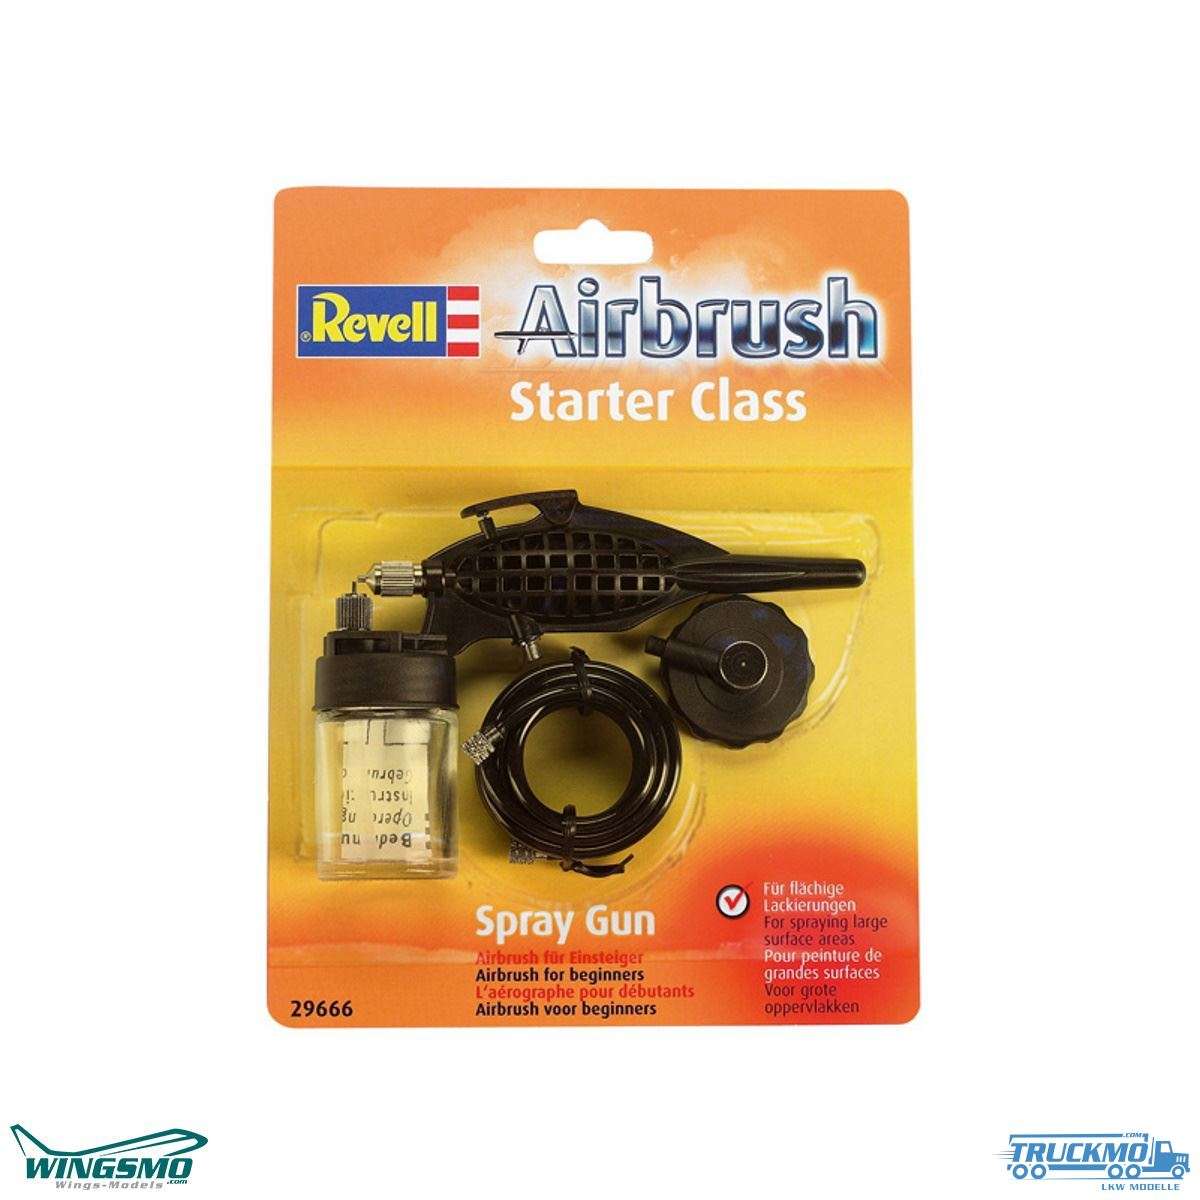 Revell Airbrush Spray Gun Starter Class 29701